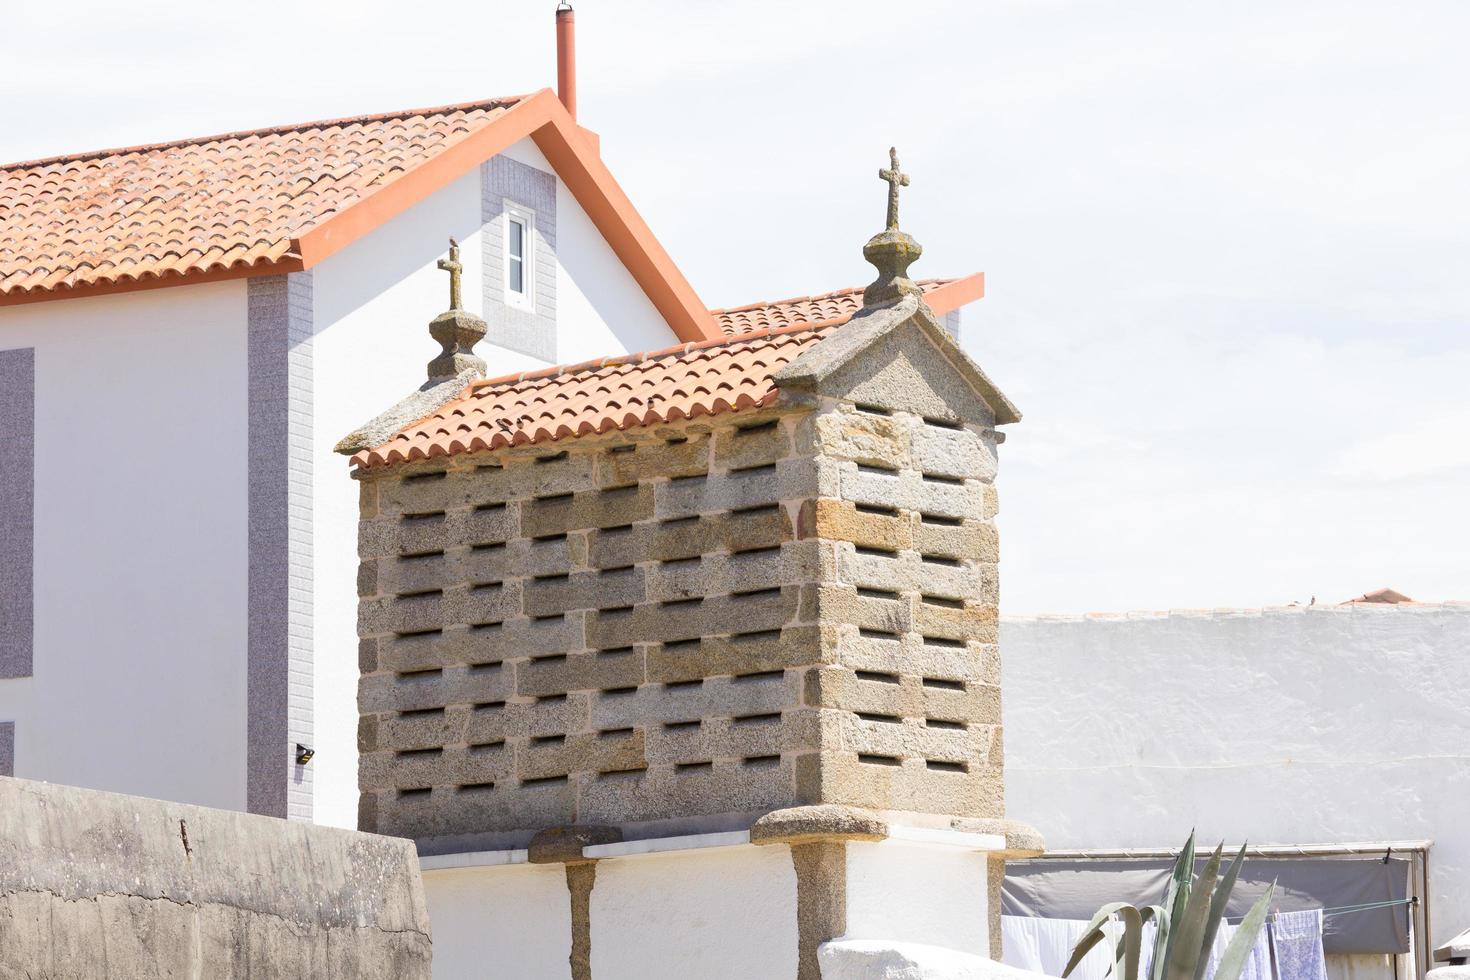 orreo, una arquitectura típica gallega para almacenar grano. foto